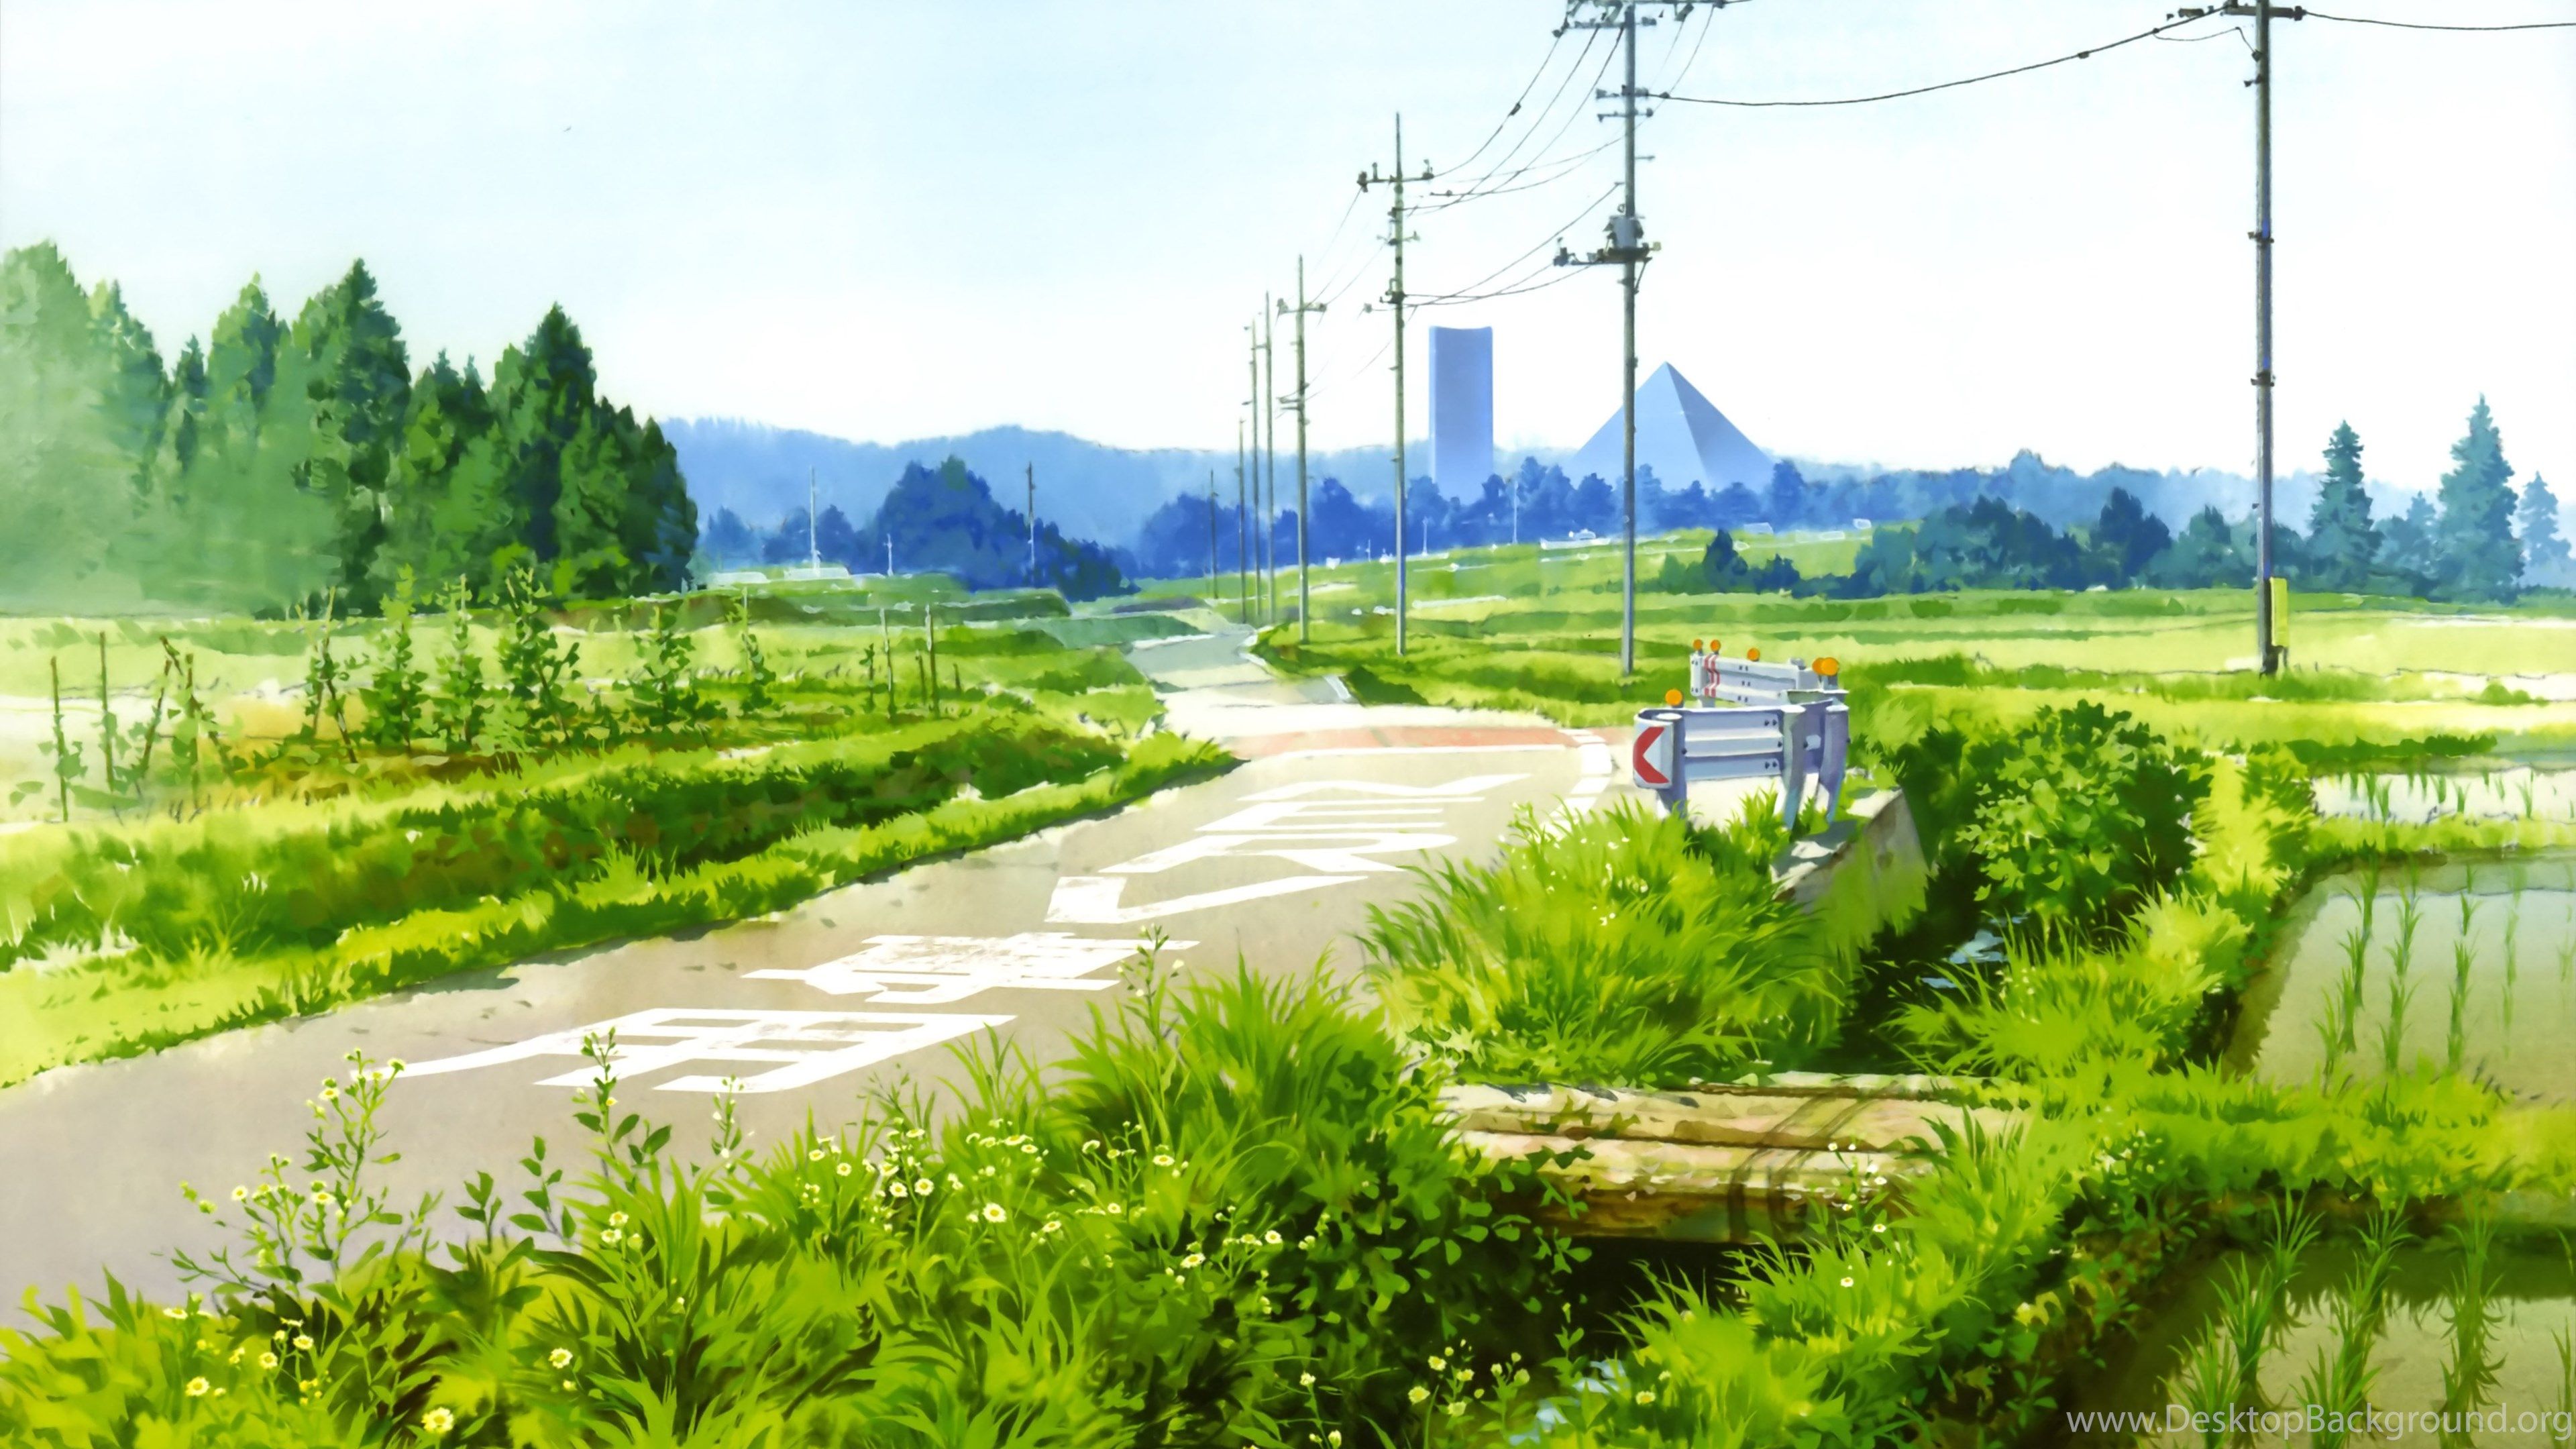 Anime Scenery Wallpaper 4323x3035 Desktop Background